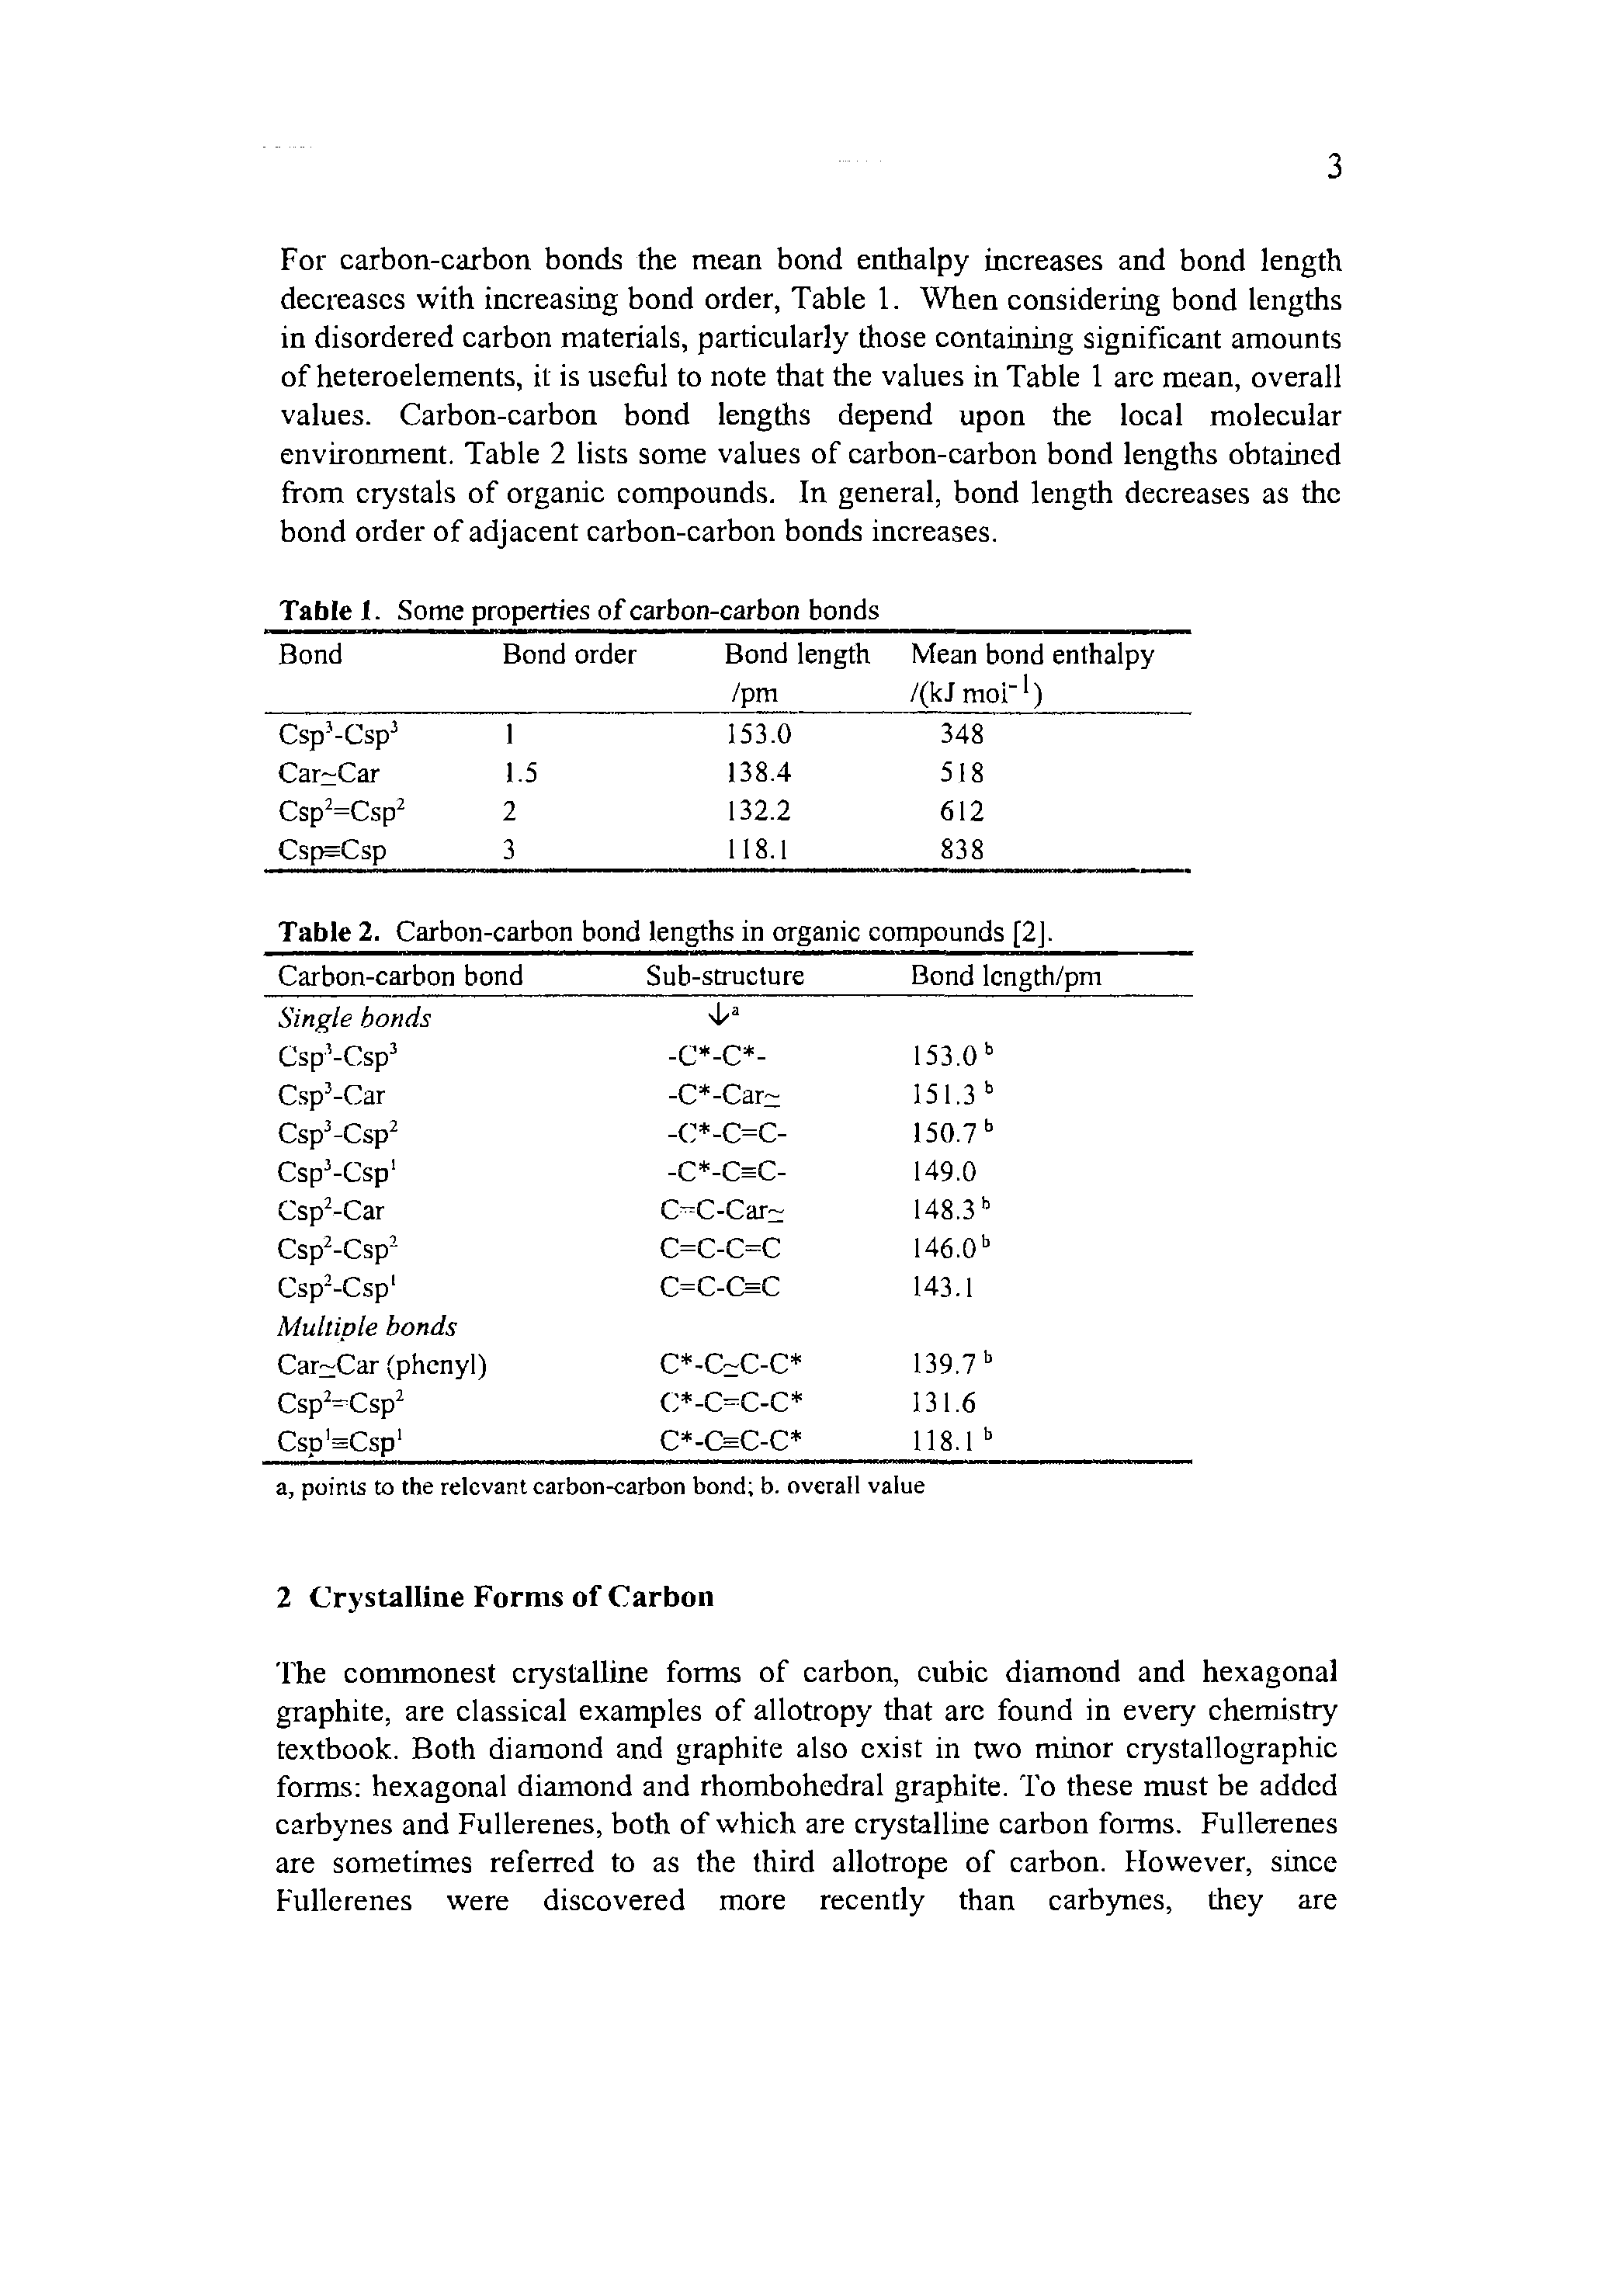 Table 2. Carbon-carbon bond lengths in organic compounds [2J.